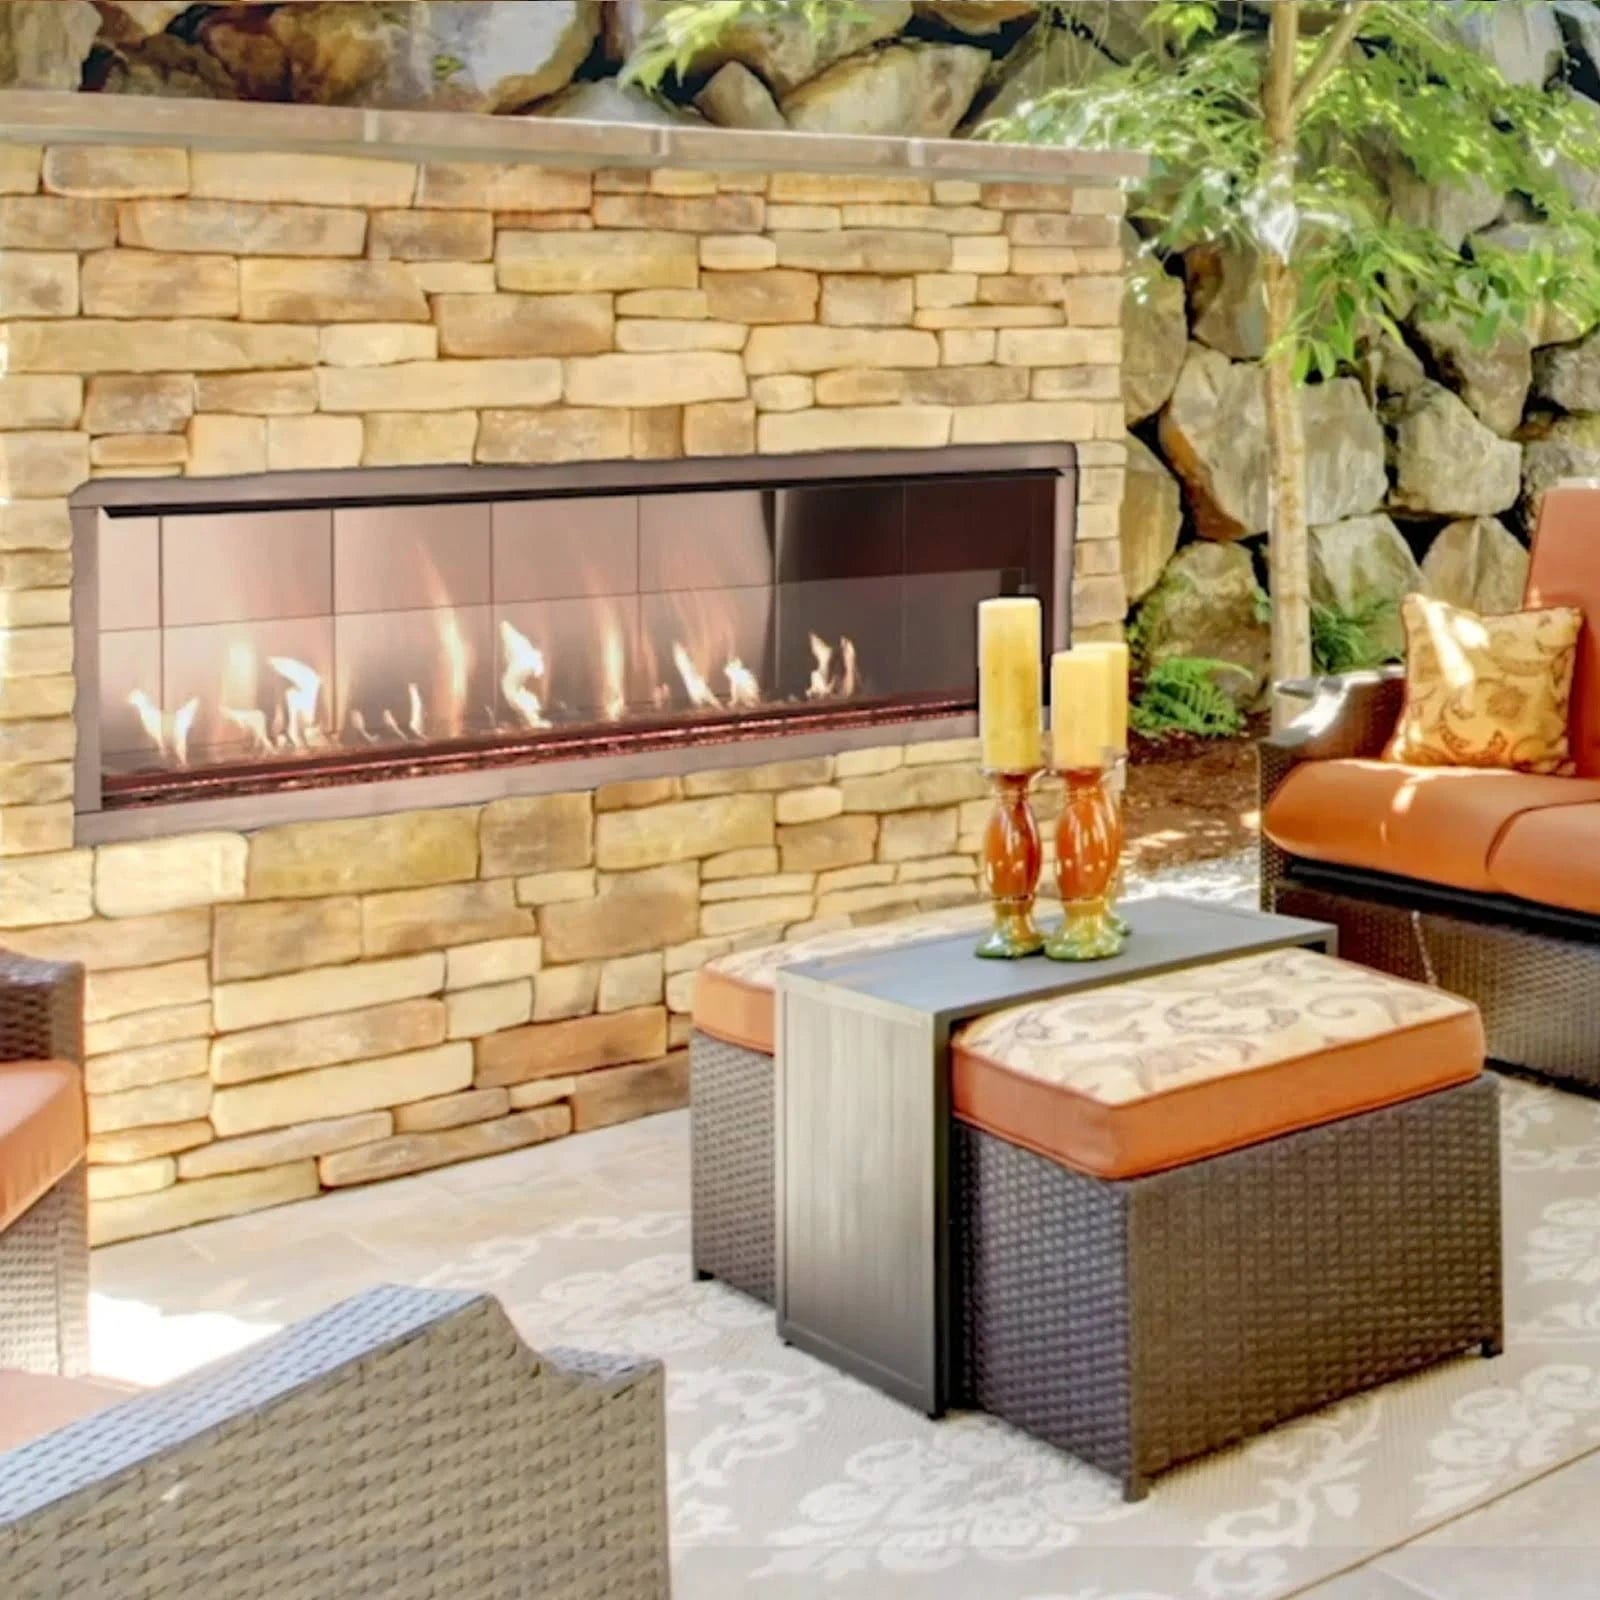 Superior 60" Contemporary Vent-Free Linear Outdoor Fireplace ODLVF60ZEN